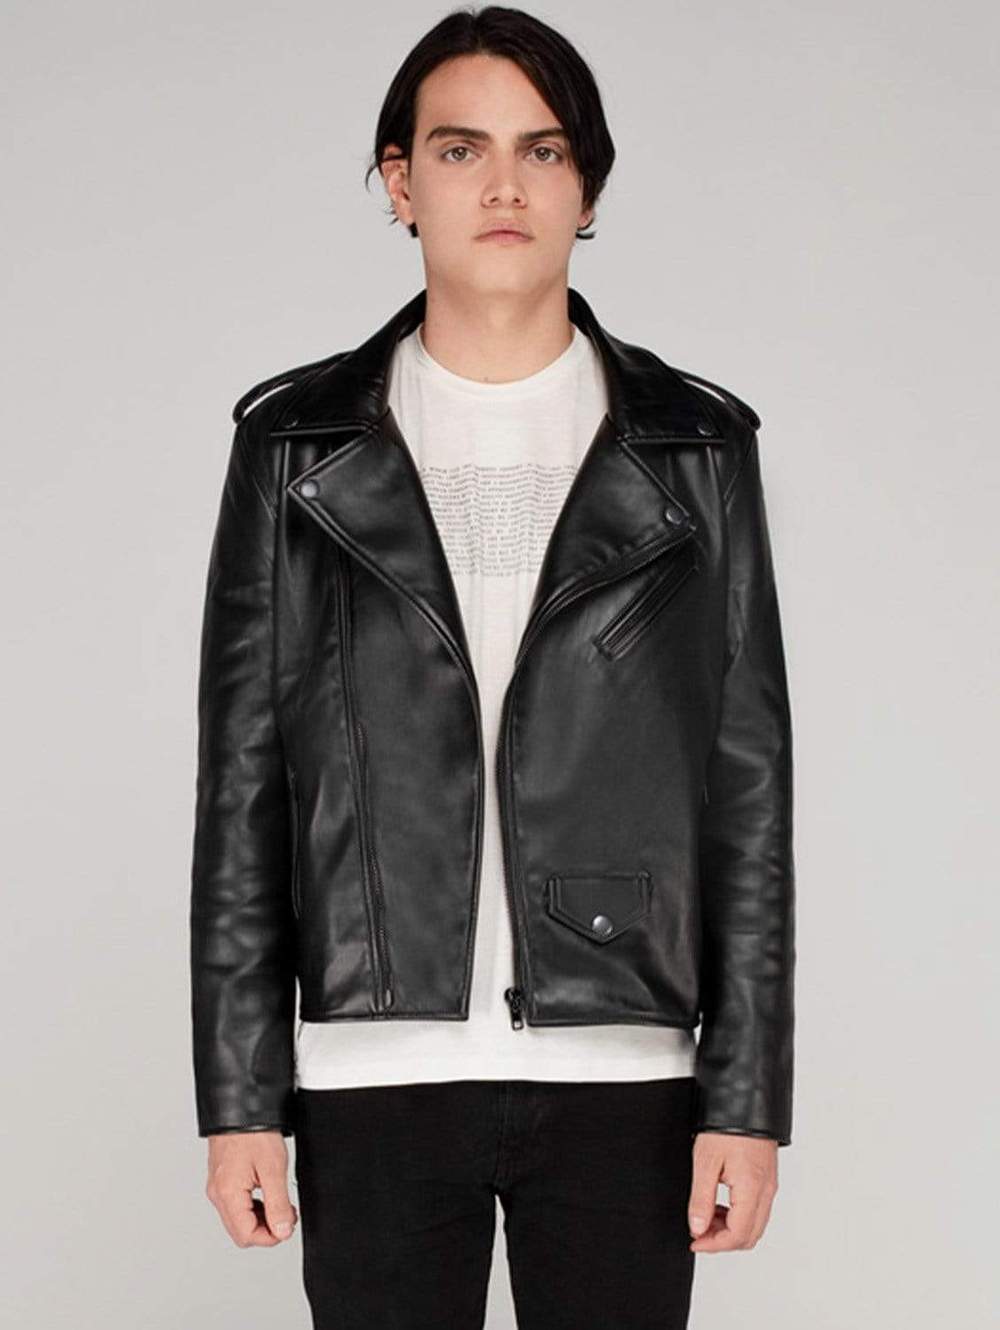 Men vegan leather jacket, black classic biker jacket from Dauntless